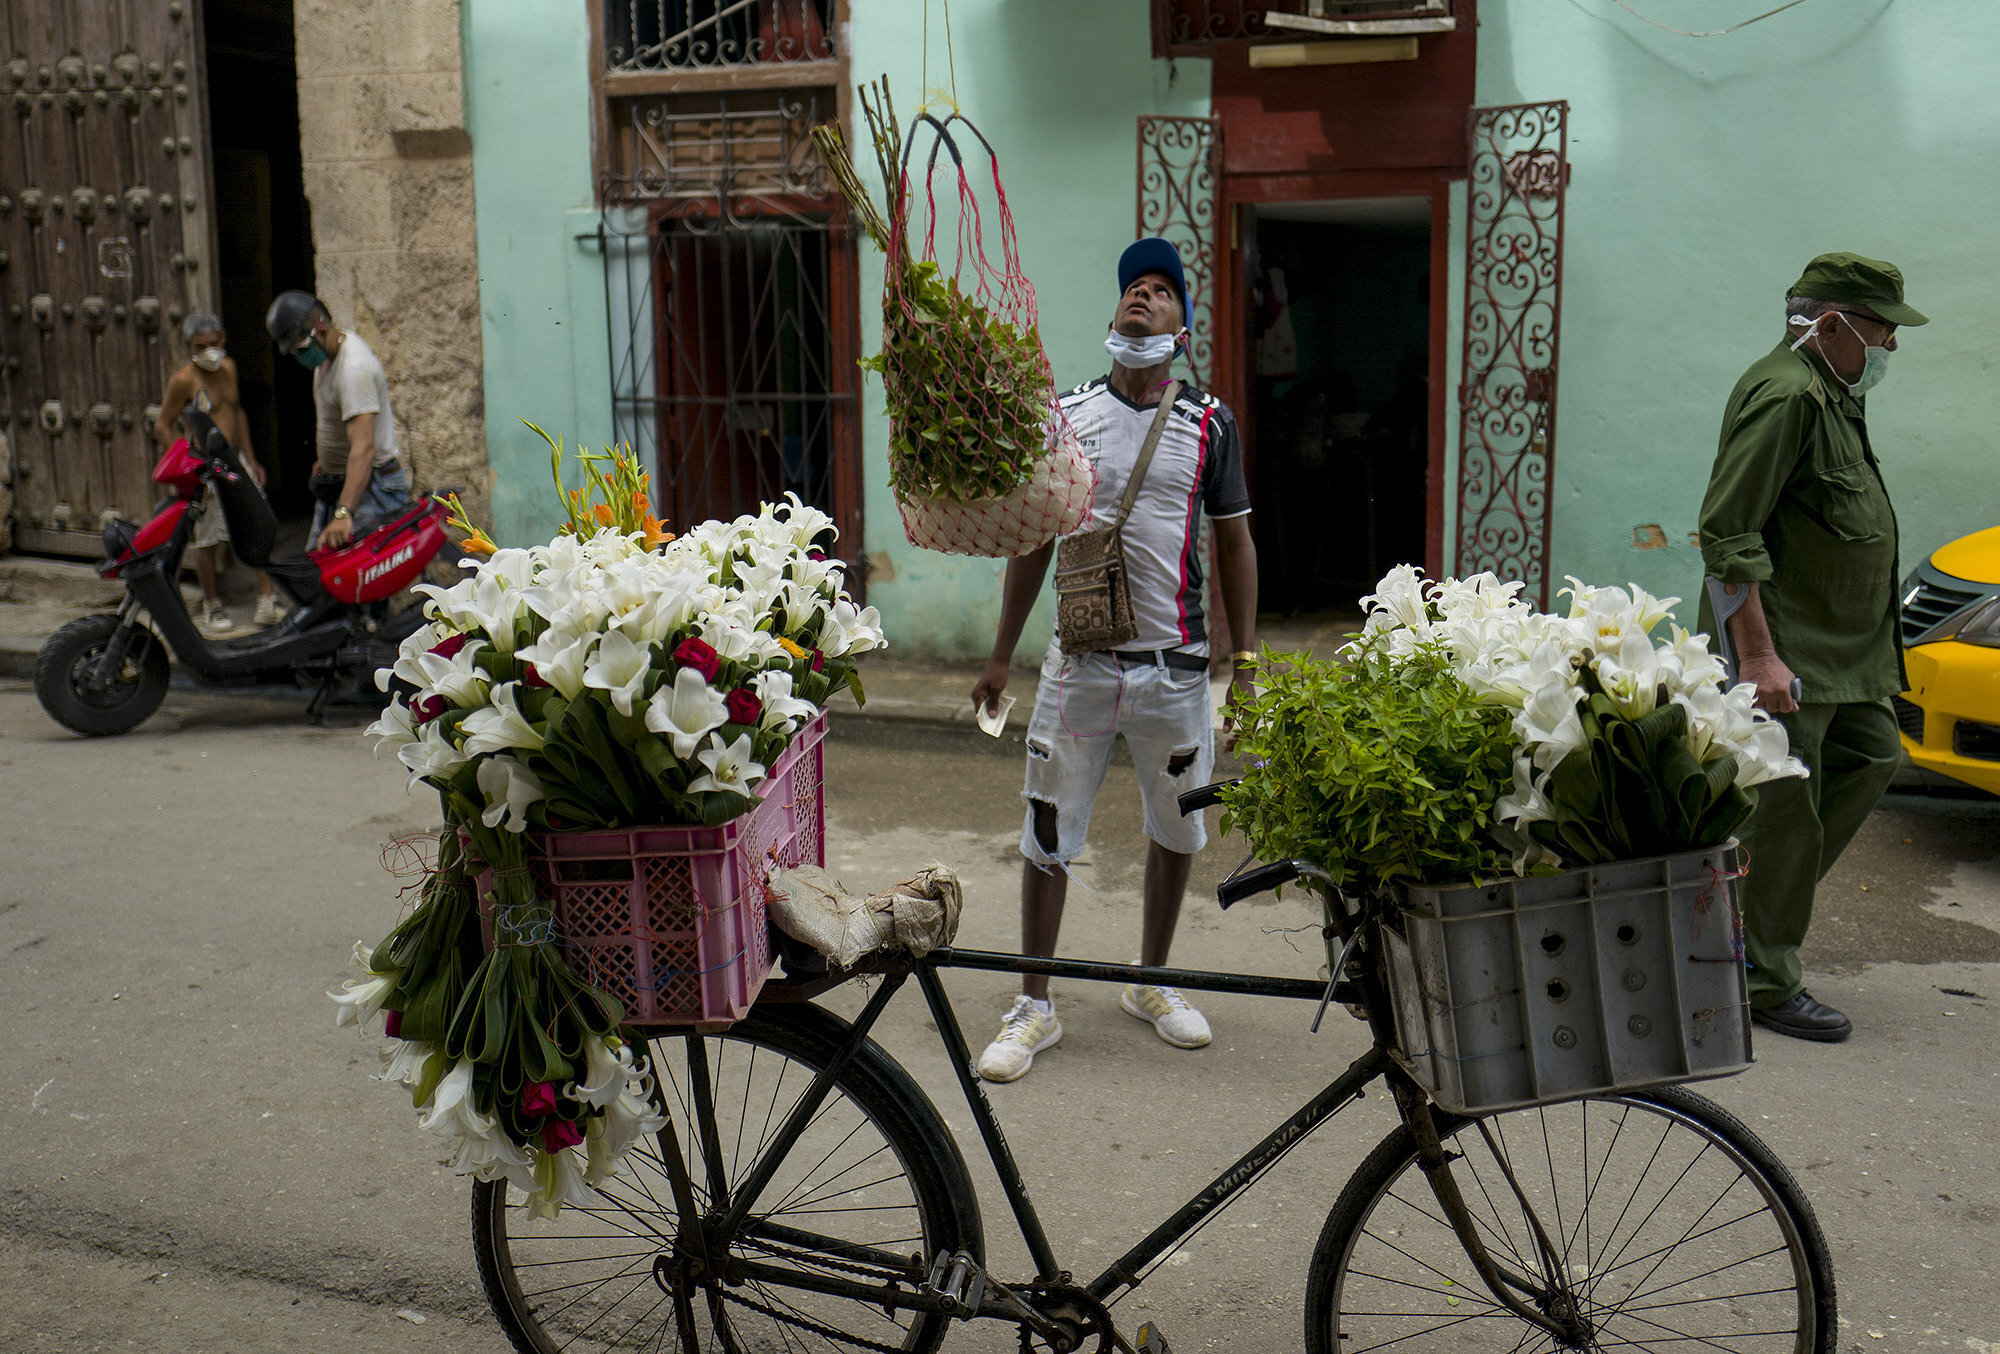  Yoilen Vicente Figueroa ya empez a recorrer las calles de La Habana Vieja para surtir de aromas y colores, a sus clientes fieles. Las flores siempre ayudan a sobrellevar esta crisis.   